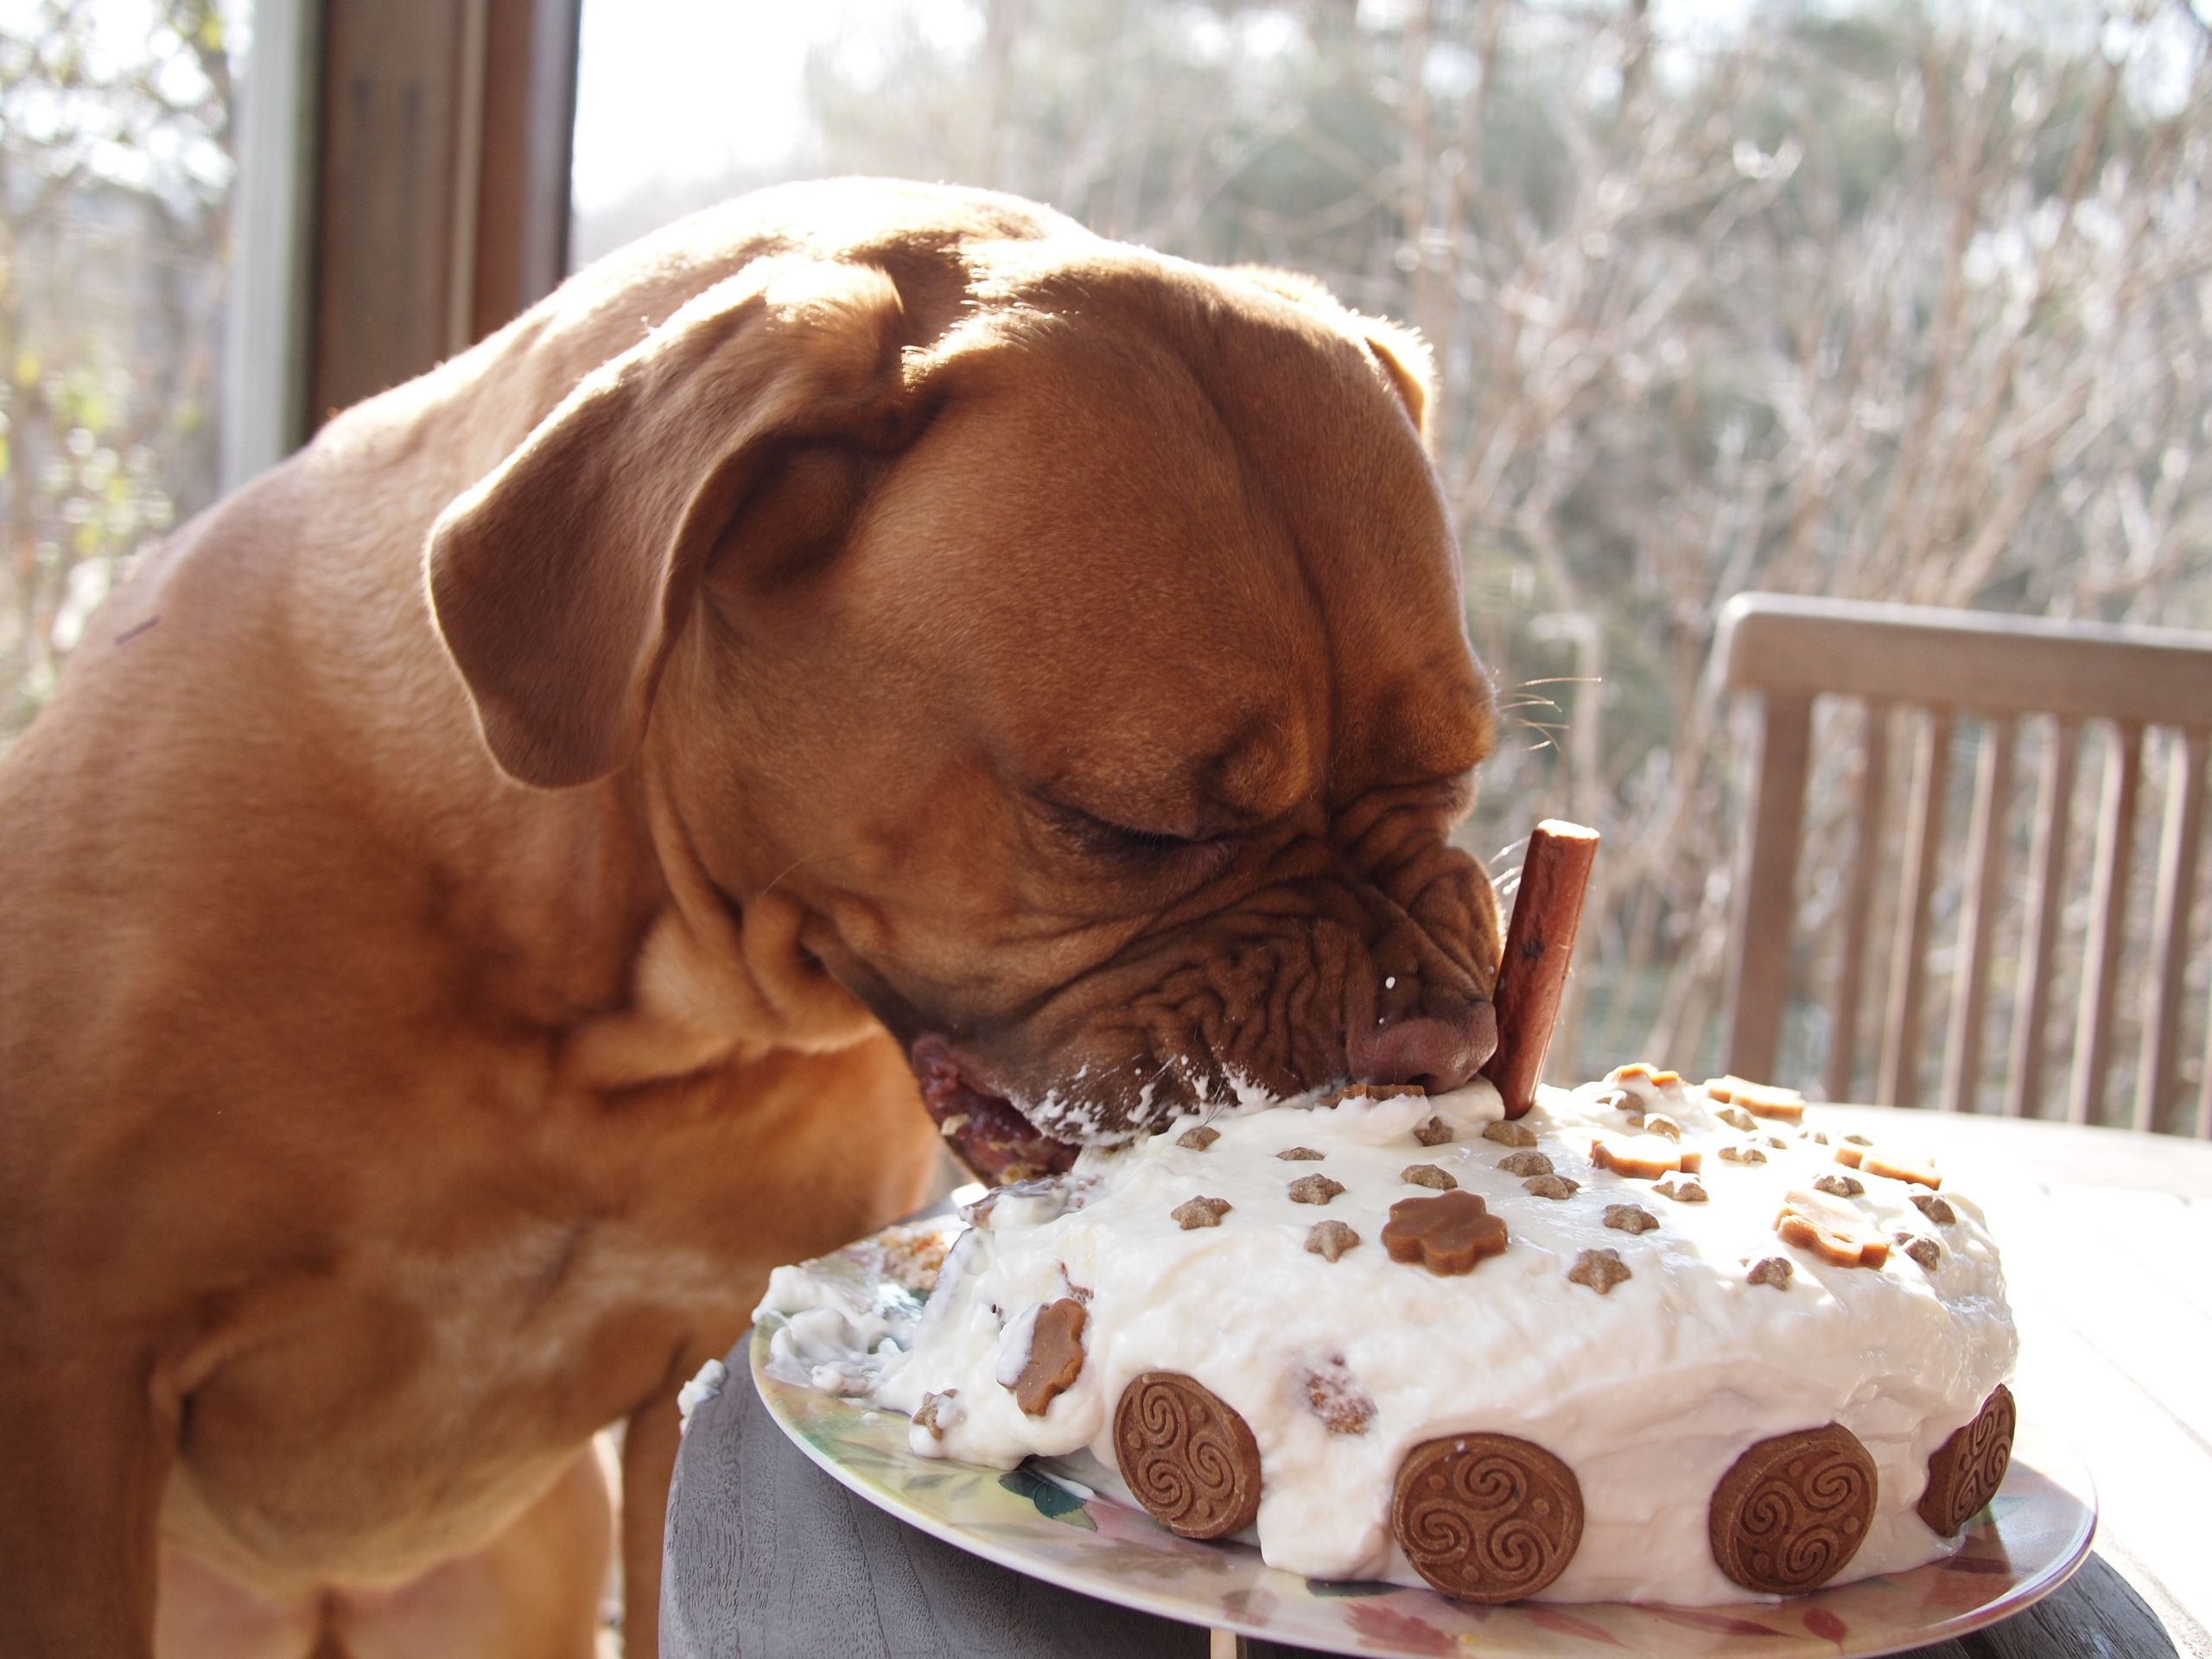 Recipes For Dog Birthday Cake
 How to bake a healthy dog birthday cake